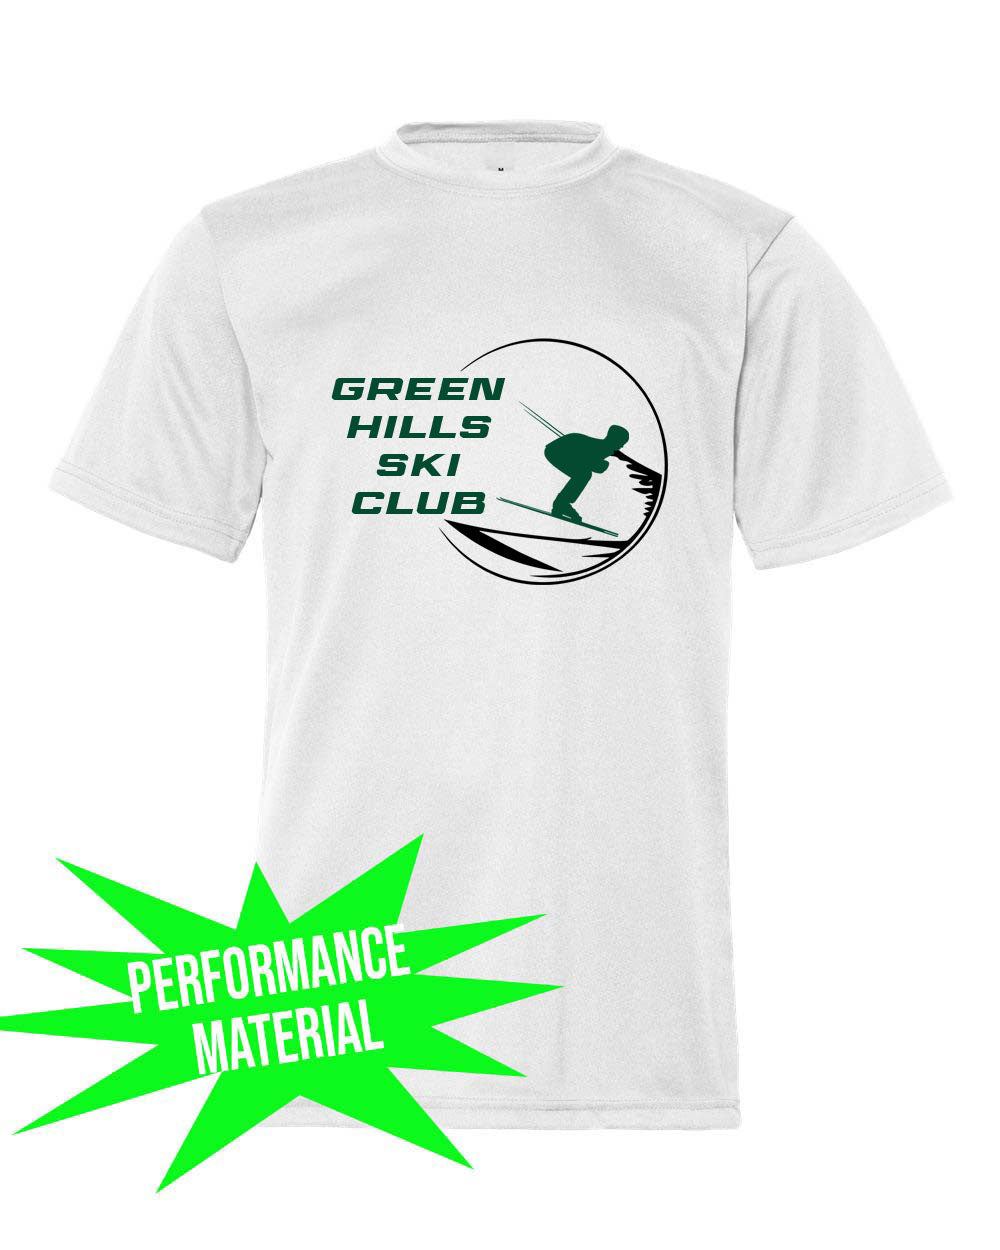 Green Hills Ski Club Performance Material T-Shirt Design 1